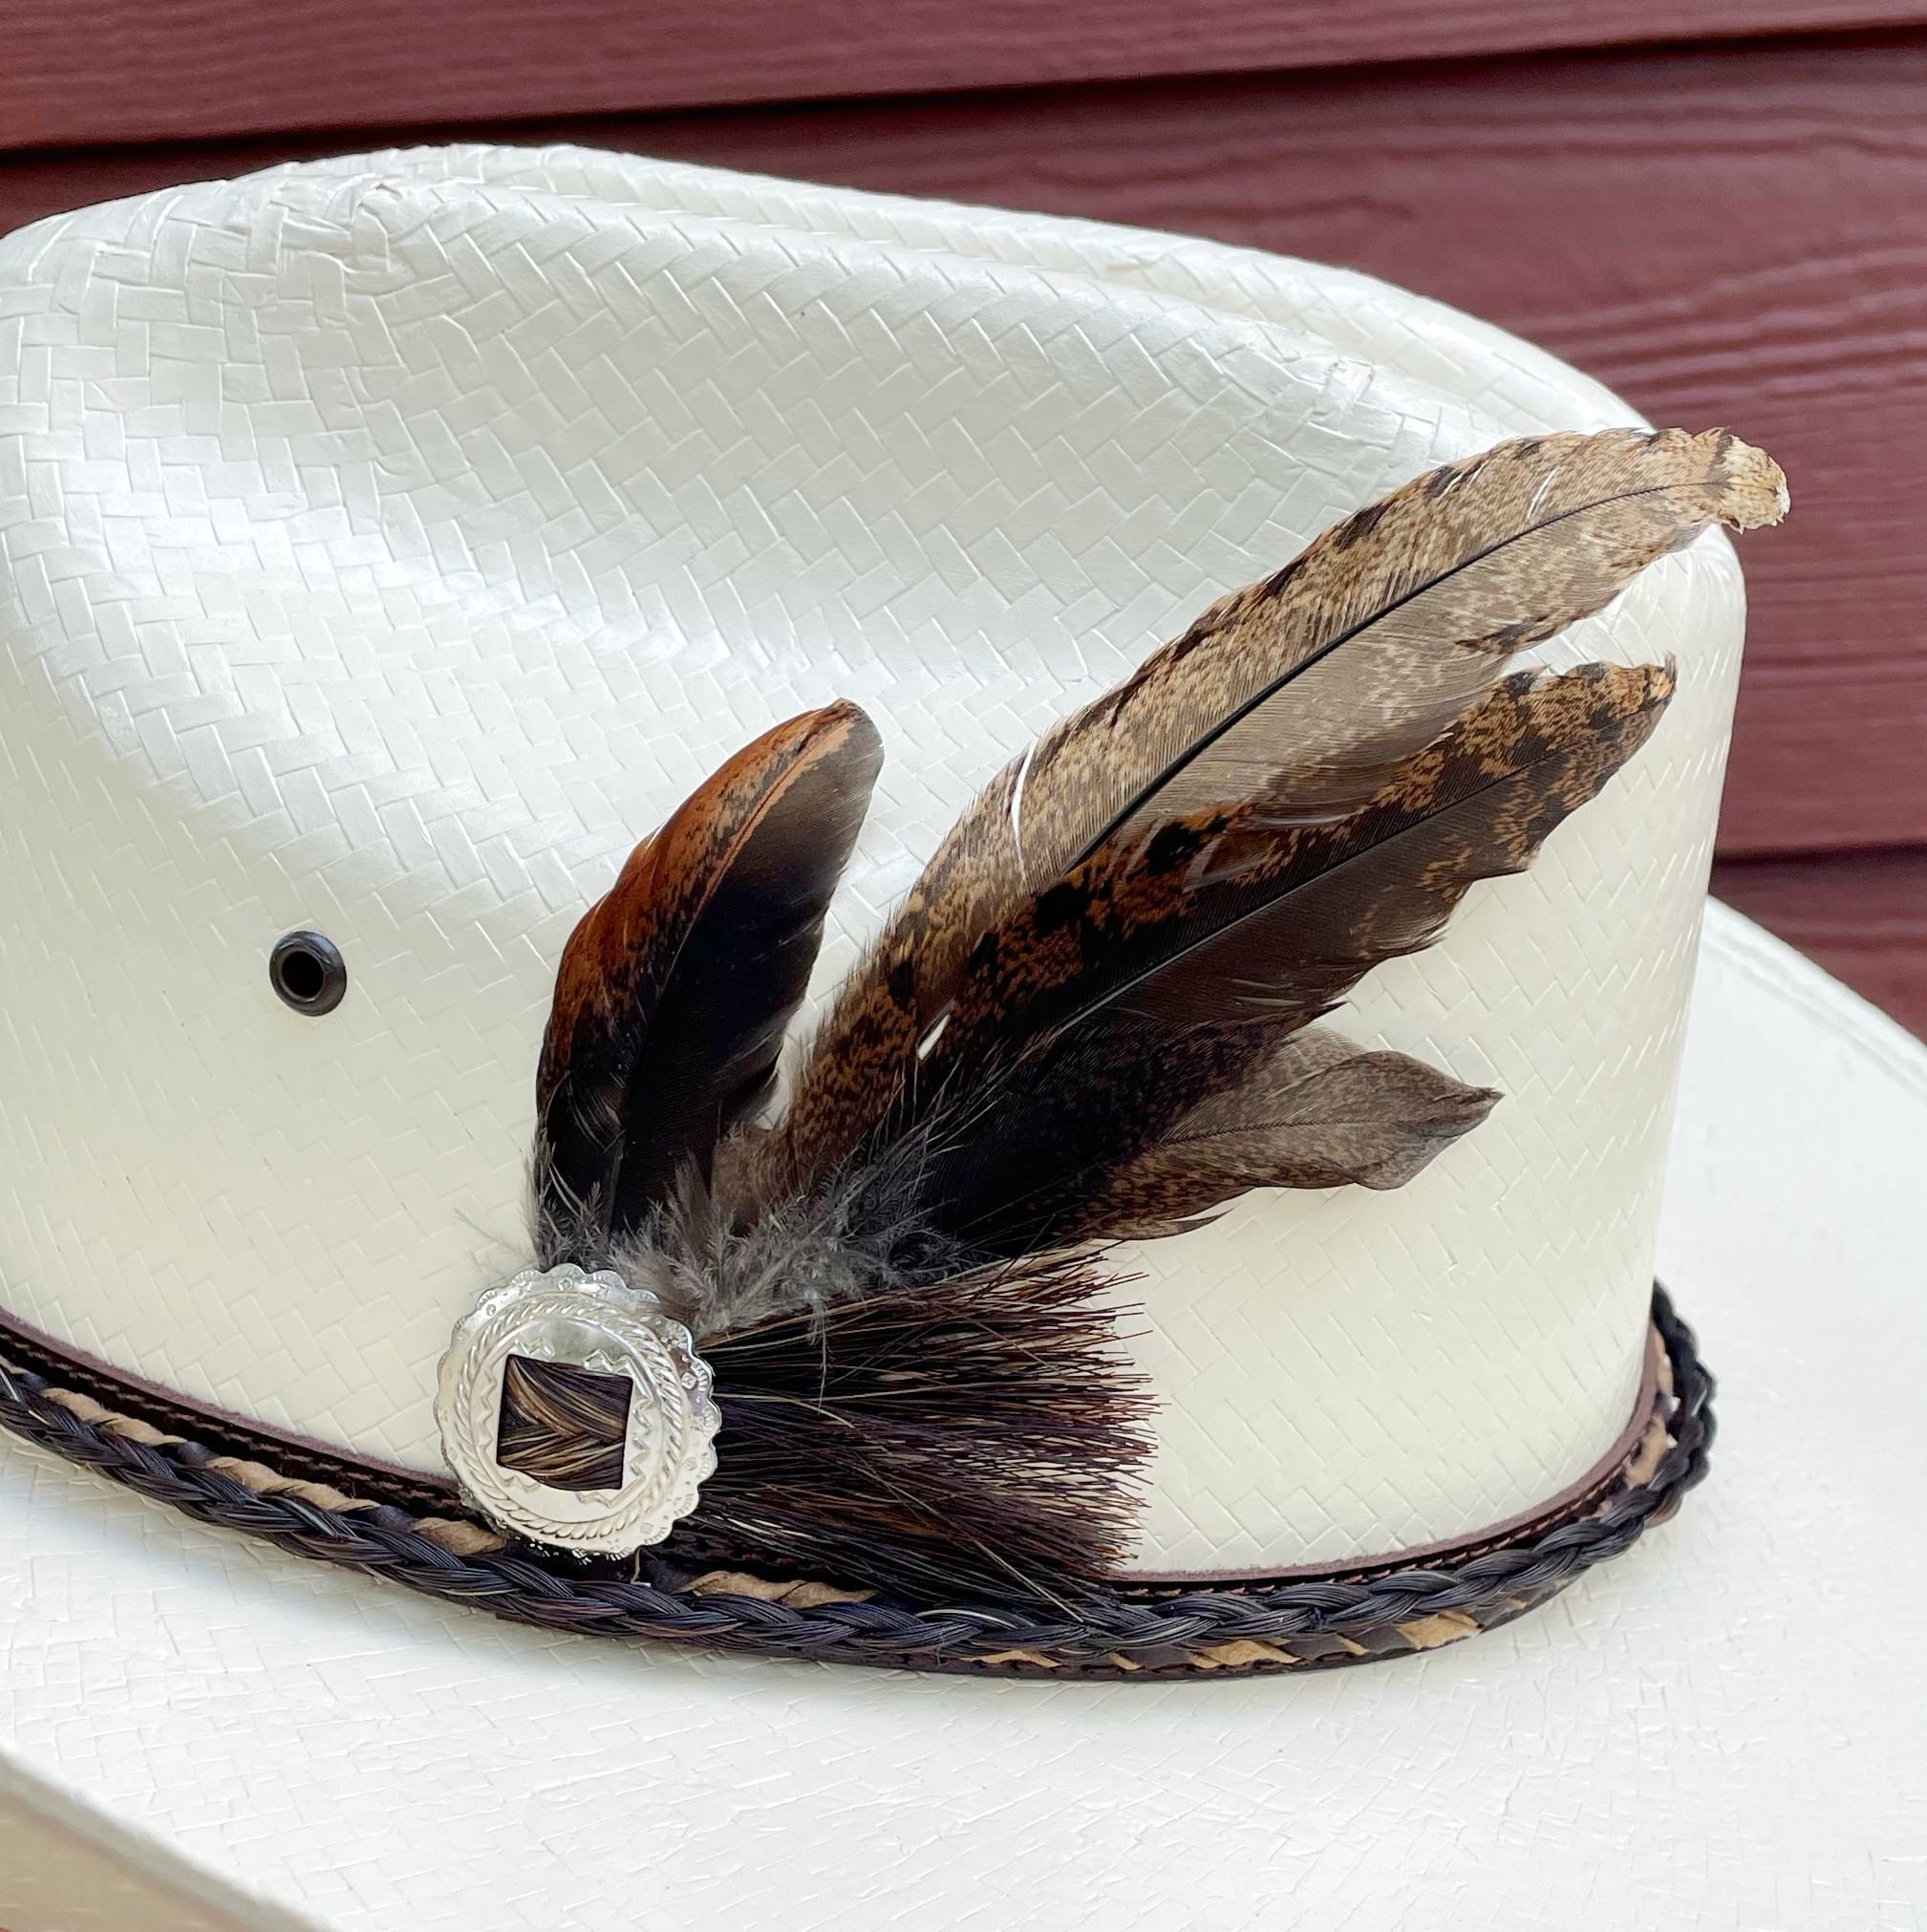 Reversible Horse Hair Hat Bands